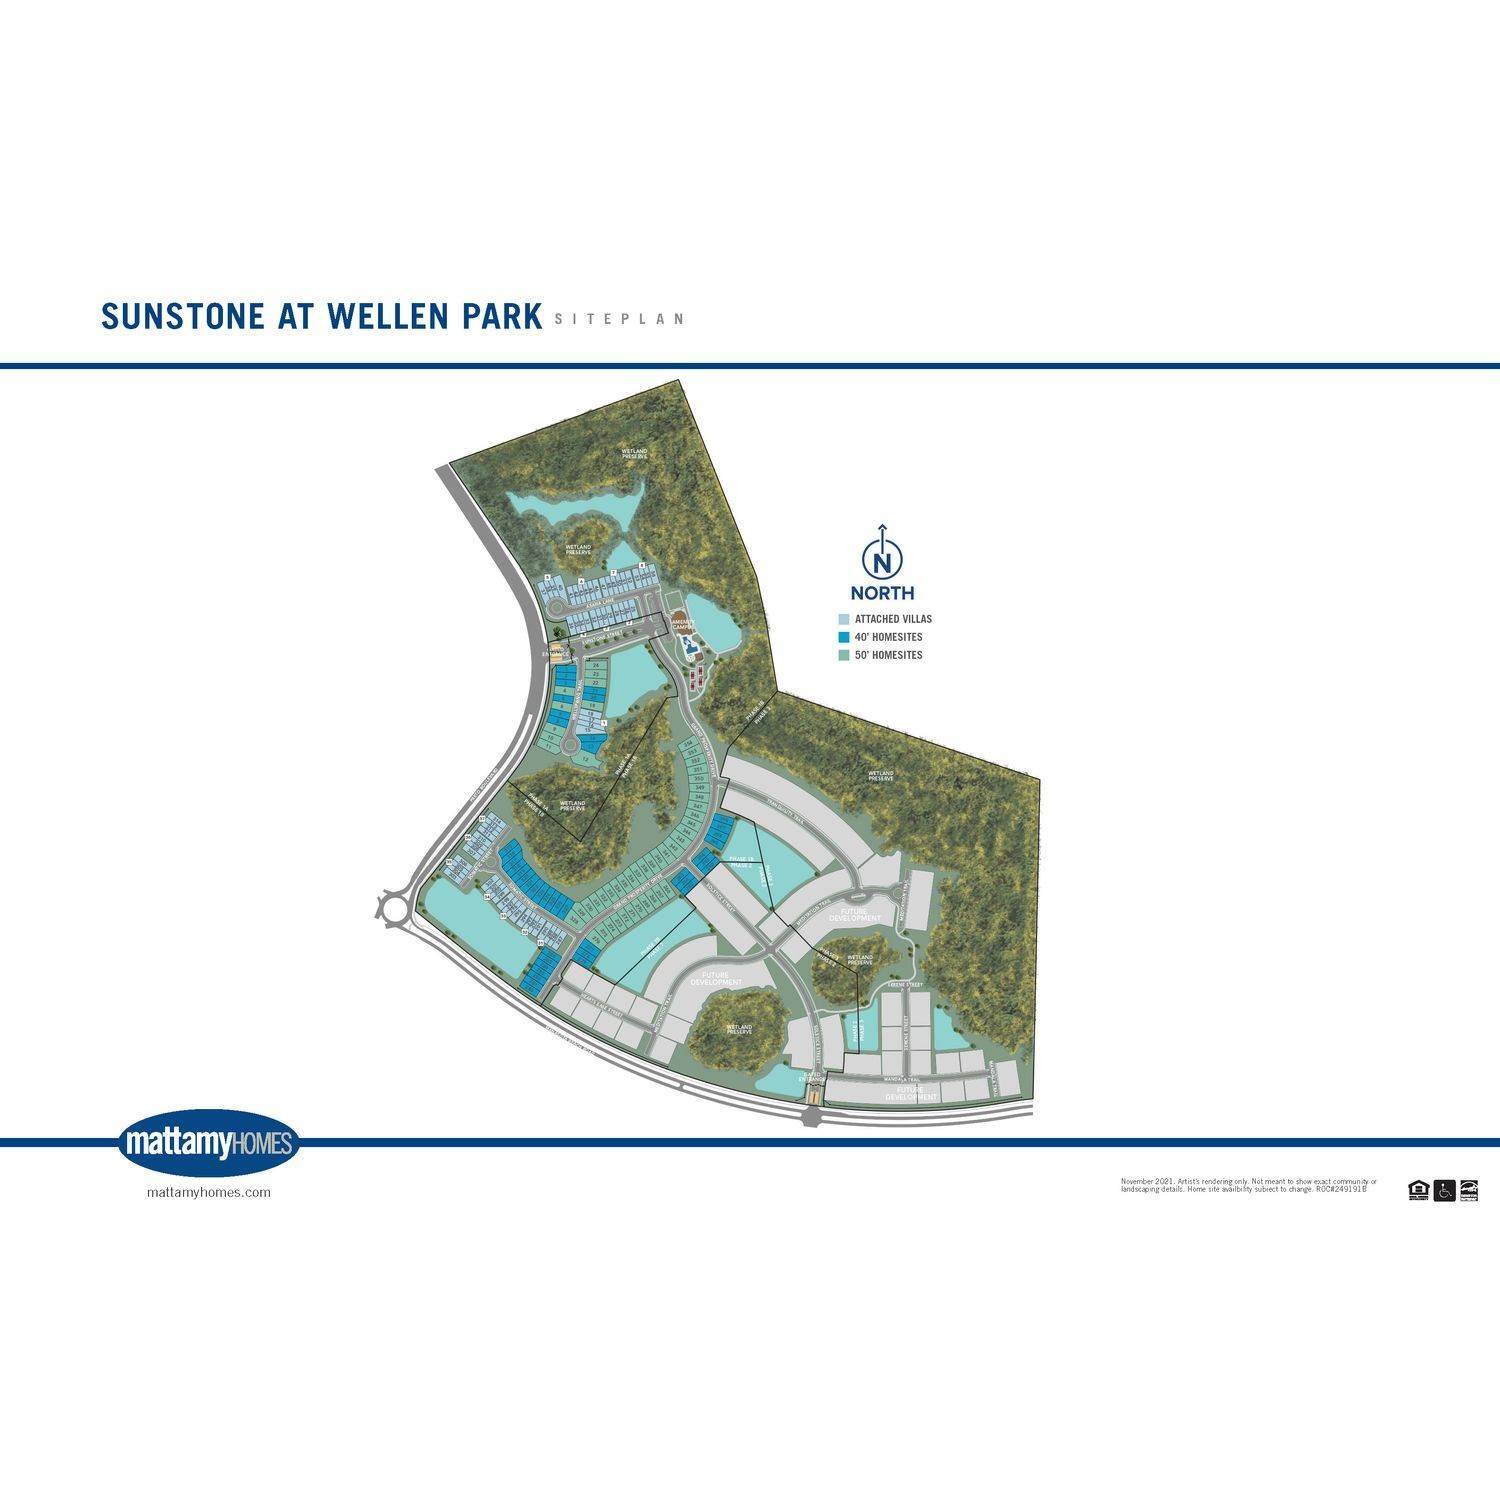 Wellen Park - Sunstone建于 18150 Wellspring Ct, 威尼斯, FL 34293